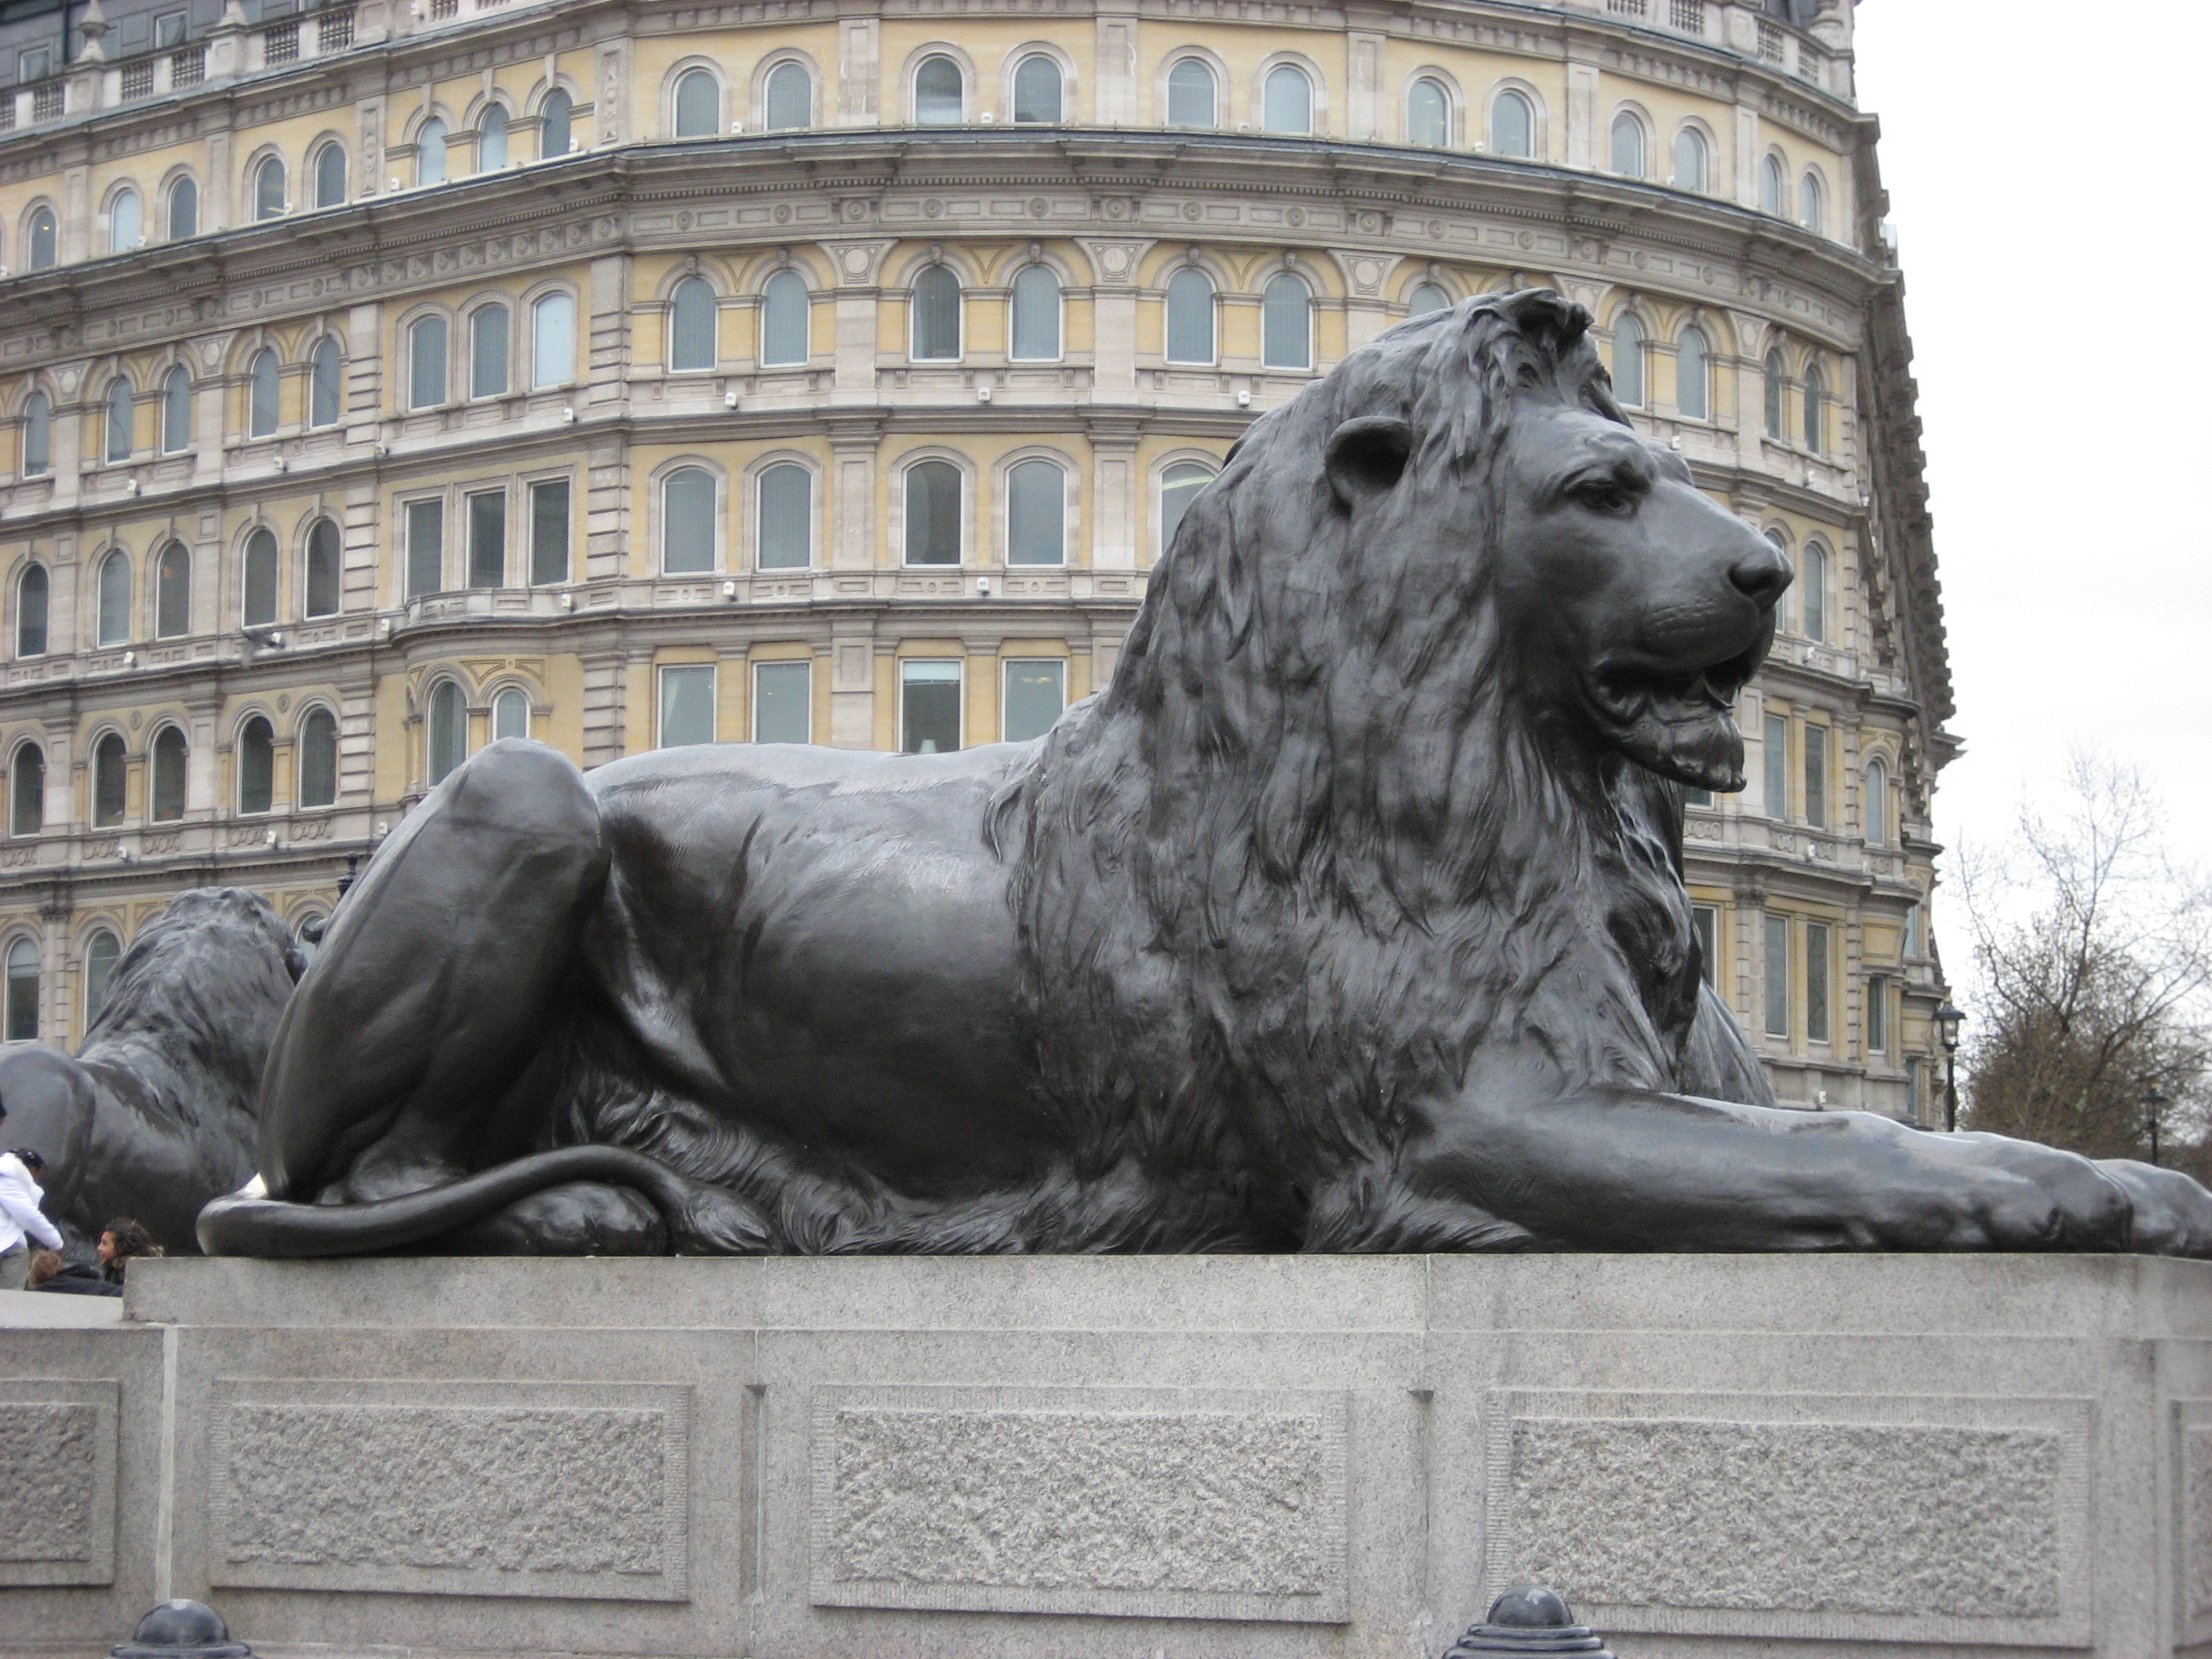 Lion Of Judah